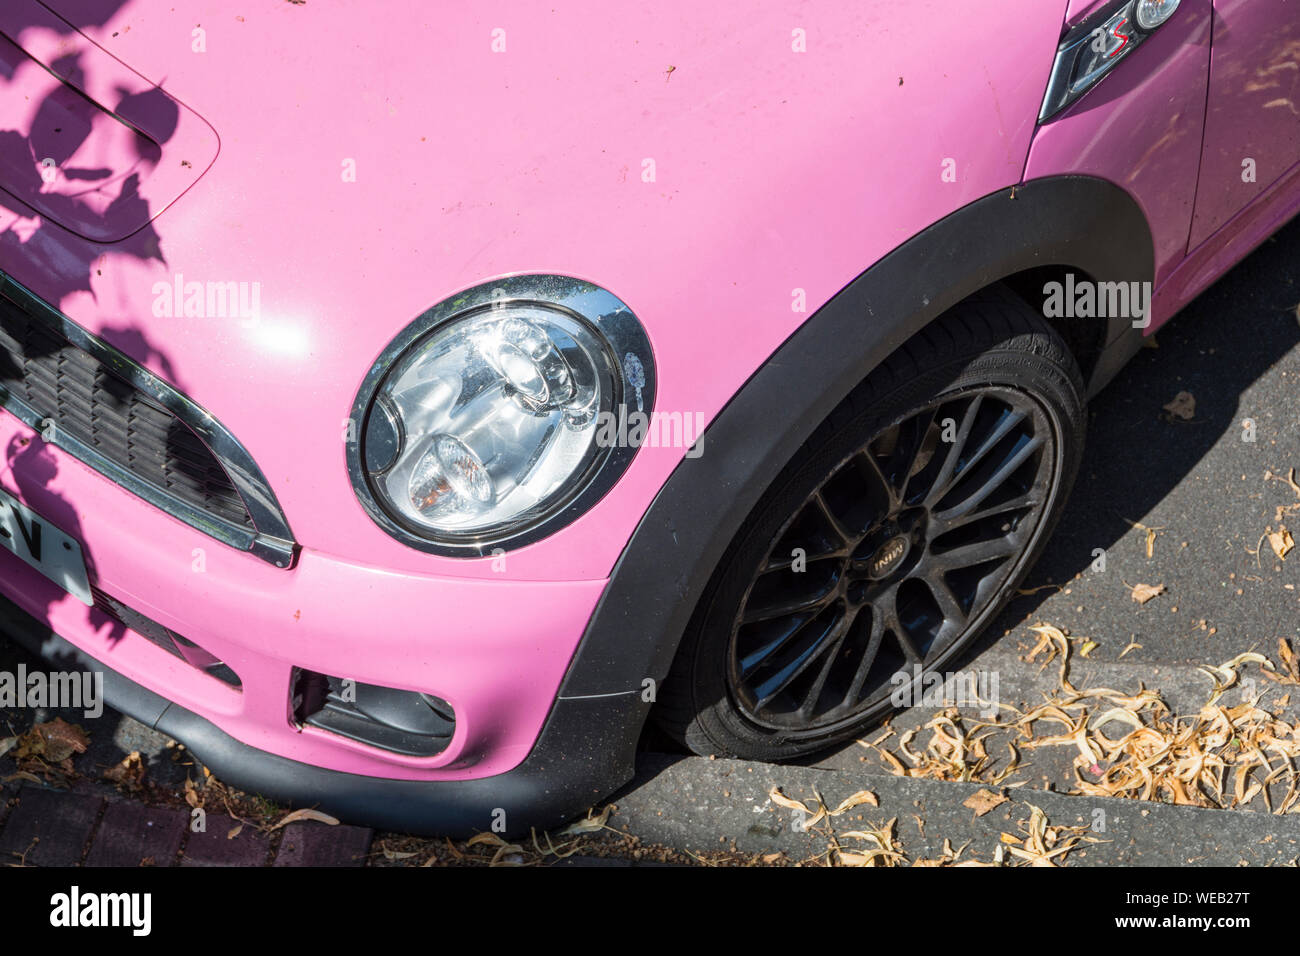 Closeup of a Pink BMW MINI COOPER Hatch front headlight Stock Photo